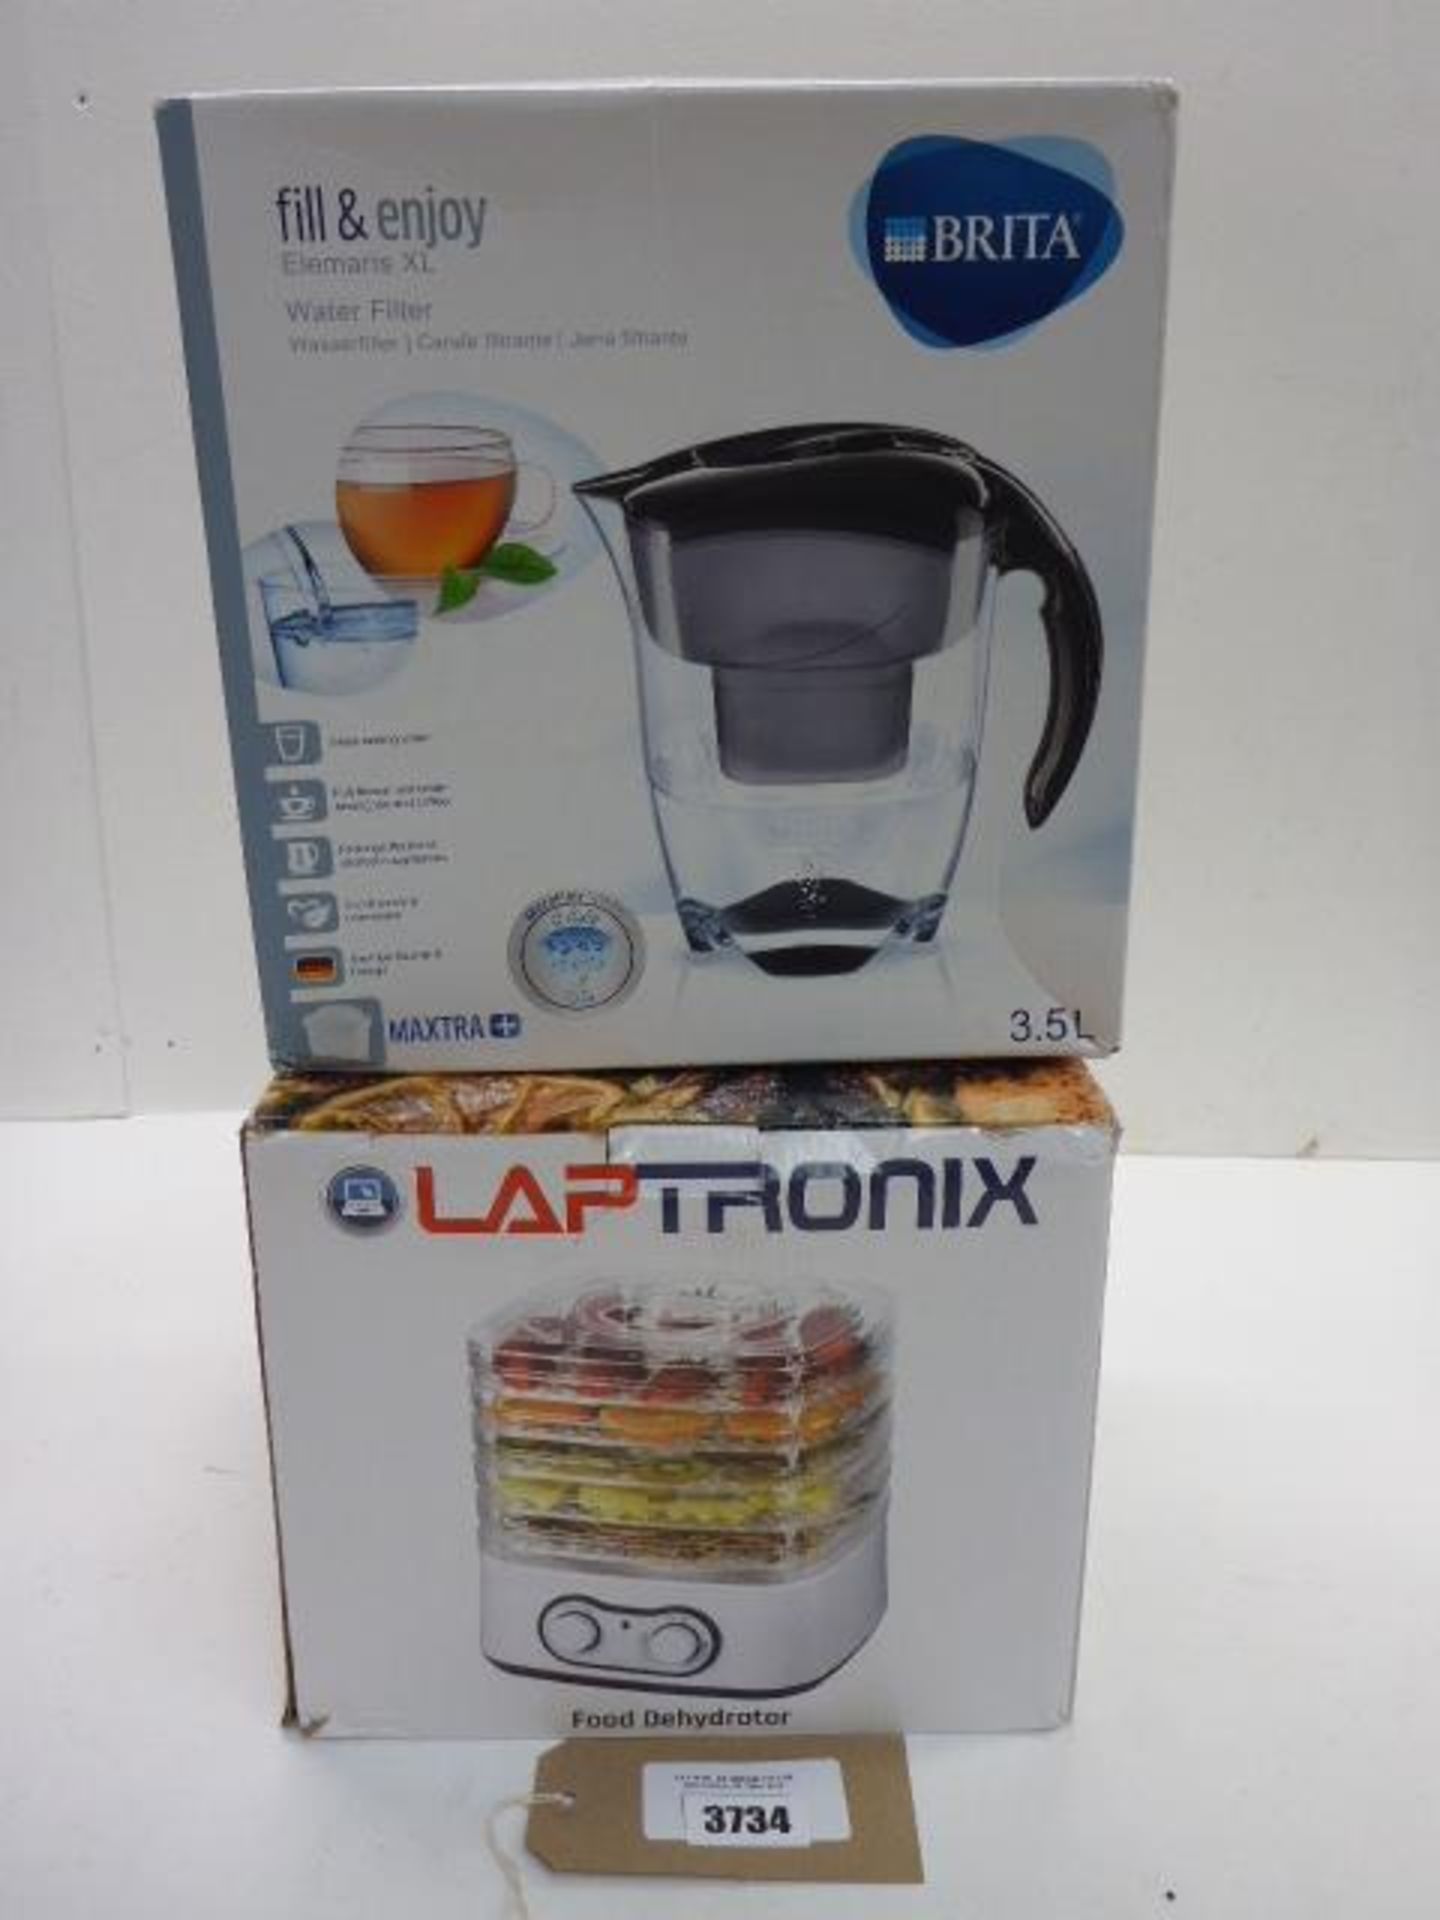 Brita Elamaris XL water filter and Laptronix food dehydrator